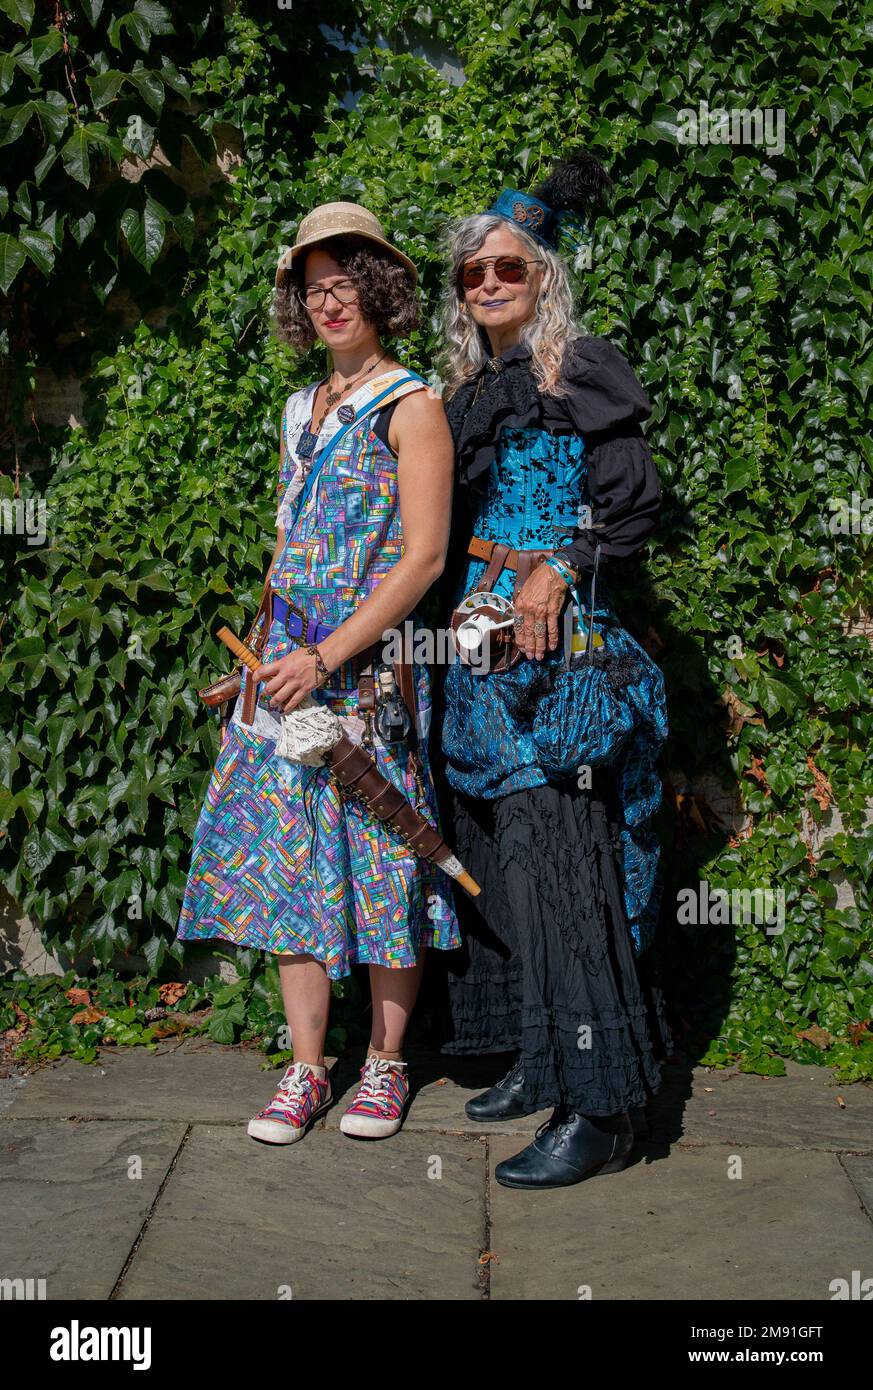 Premium Photo  Two women wearing steampunk clothing, one wearing